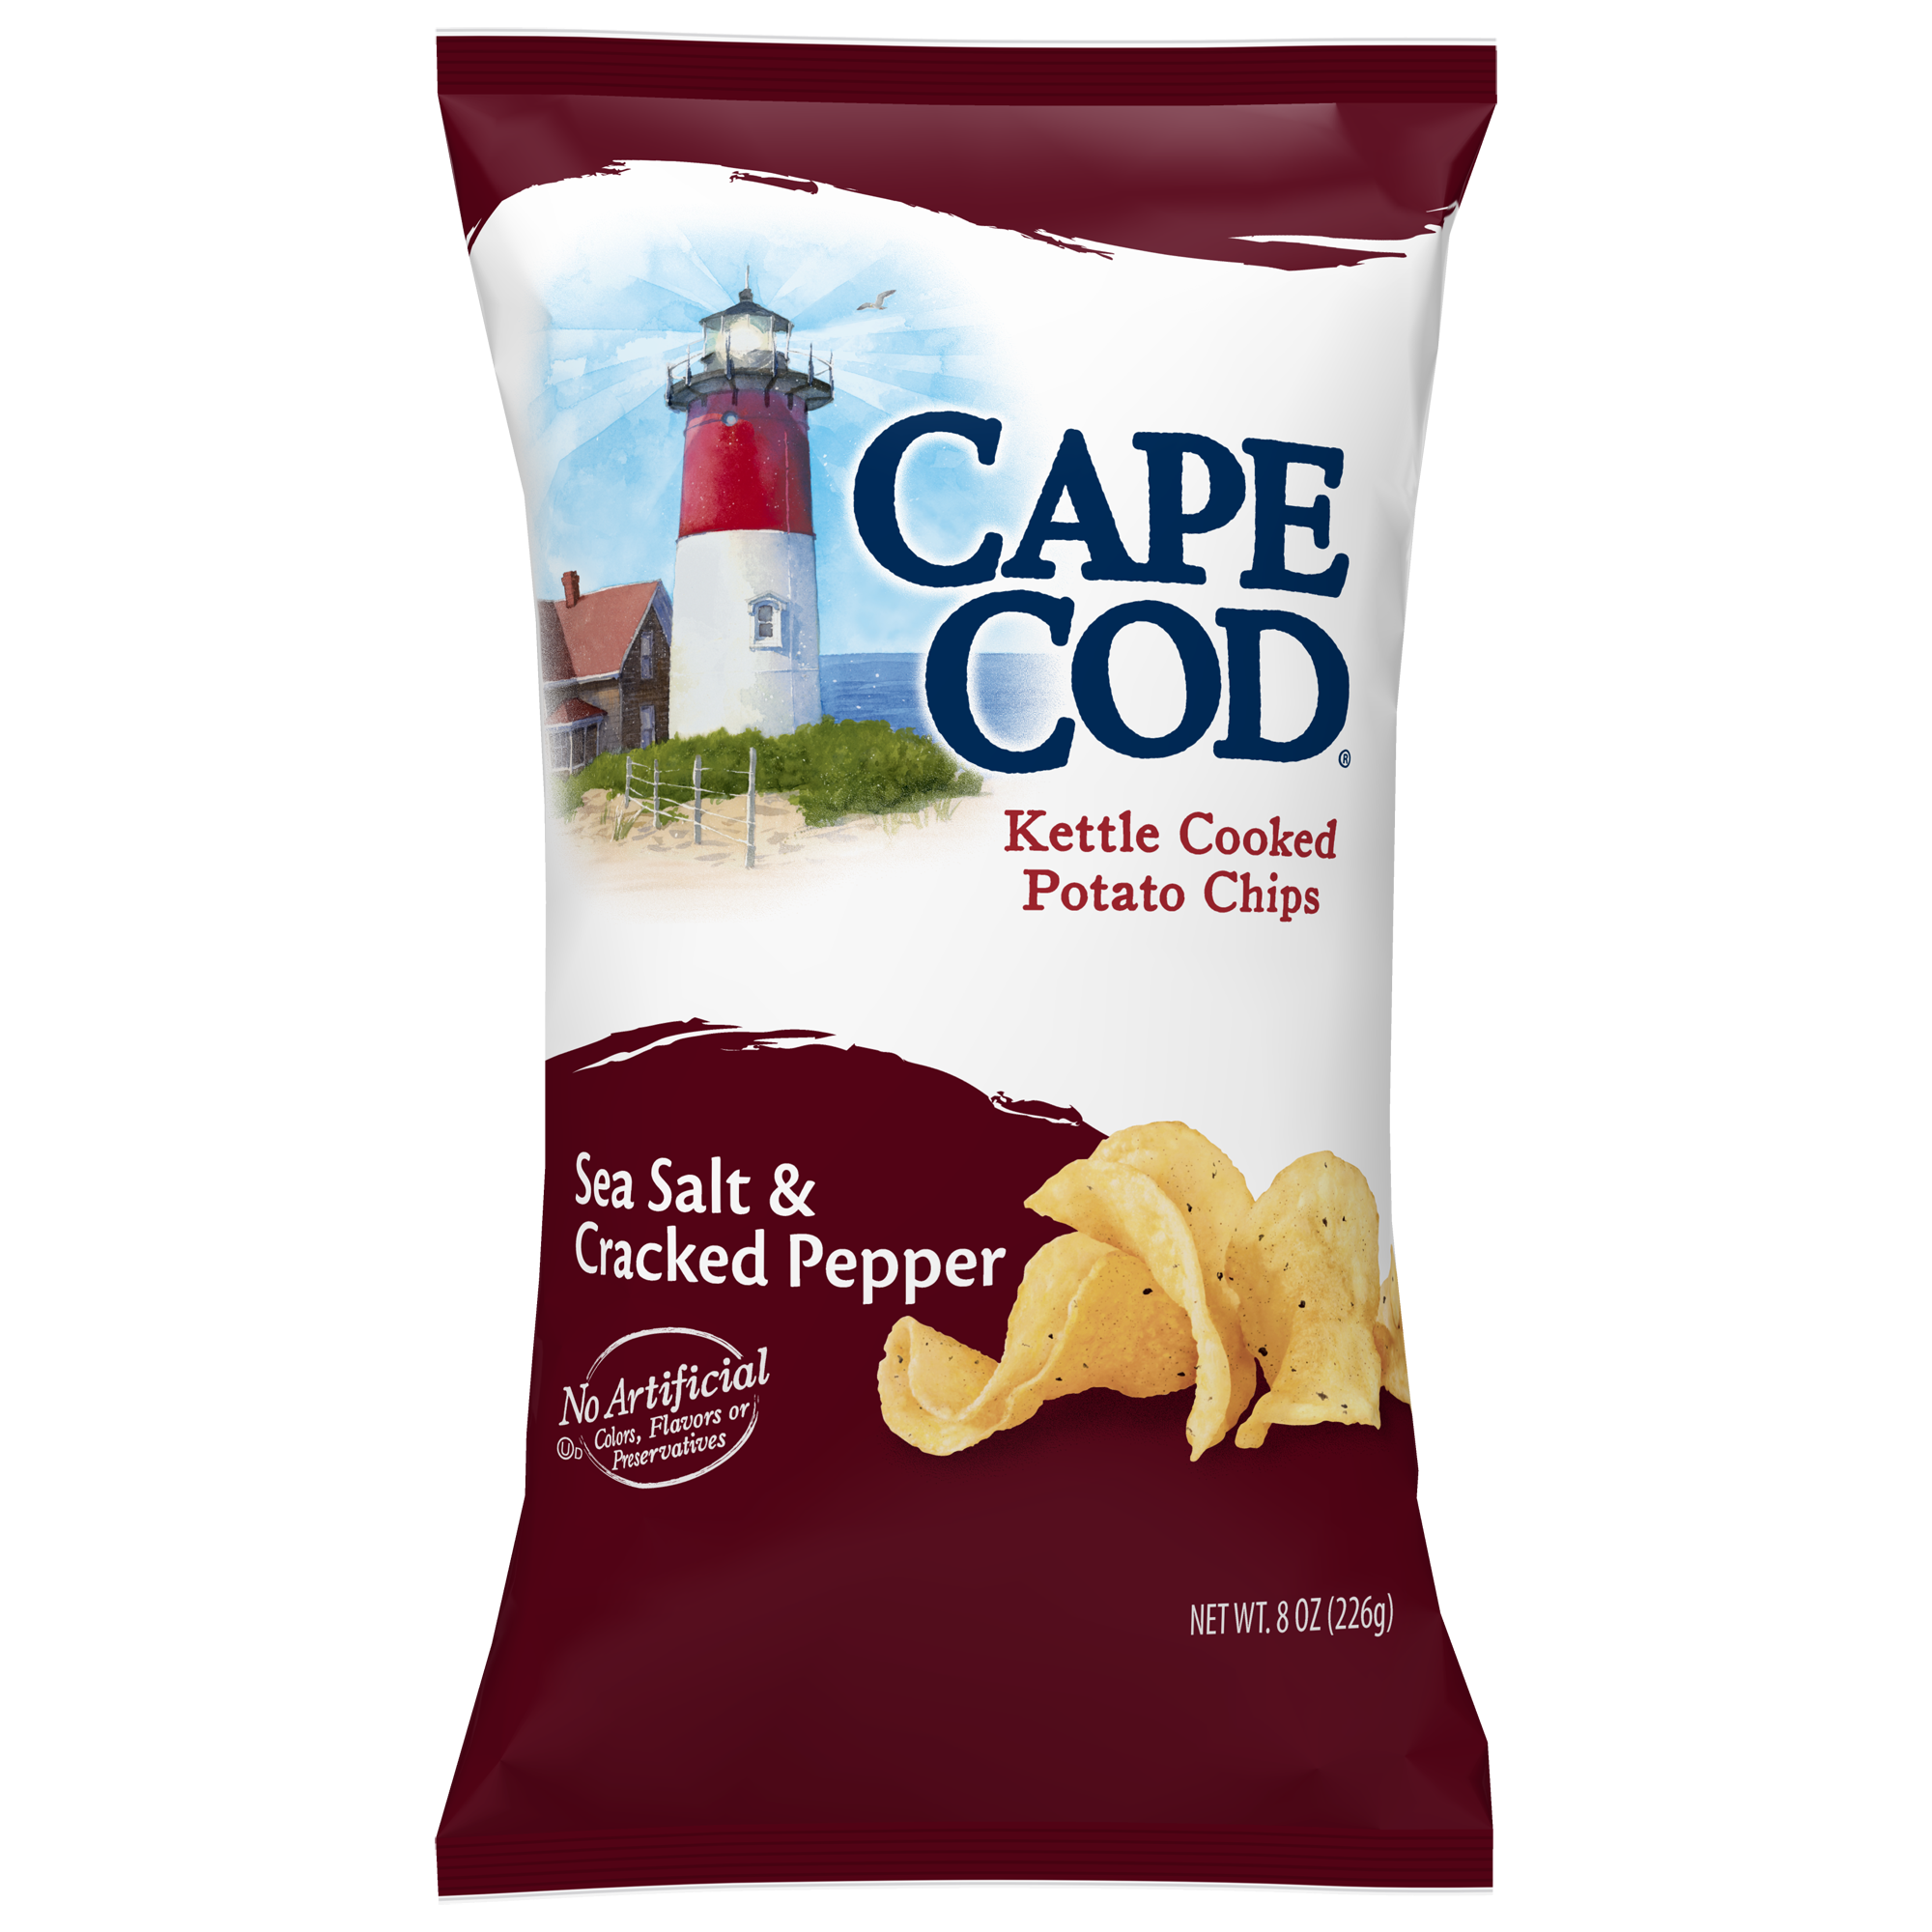 Sea Salt & Cracked Pepper - Cape Cod Chips